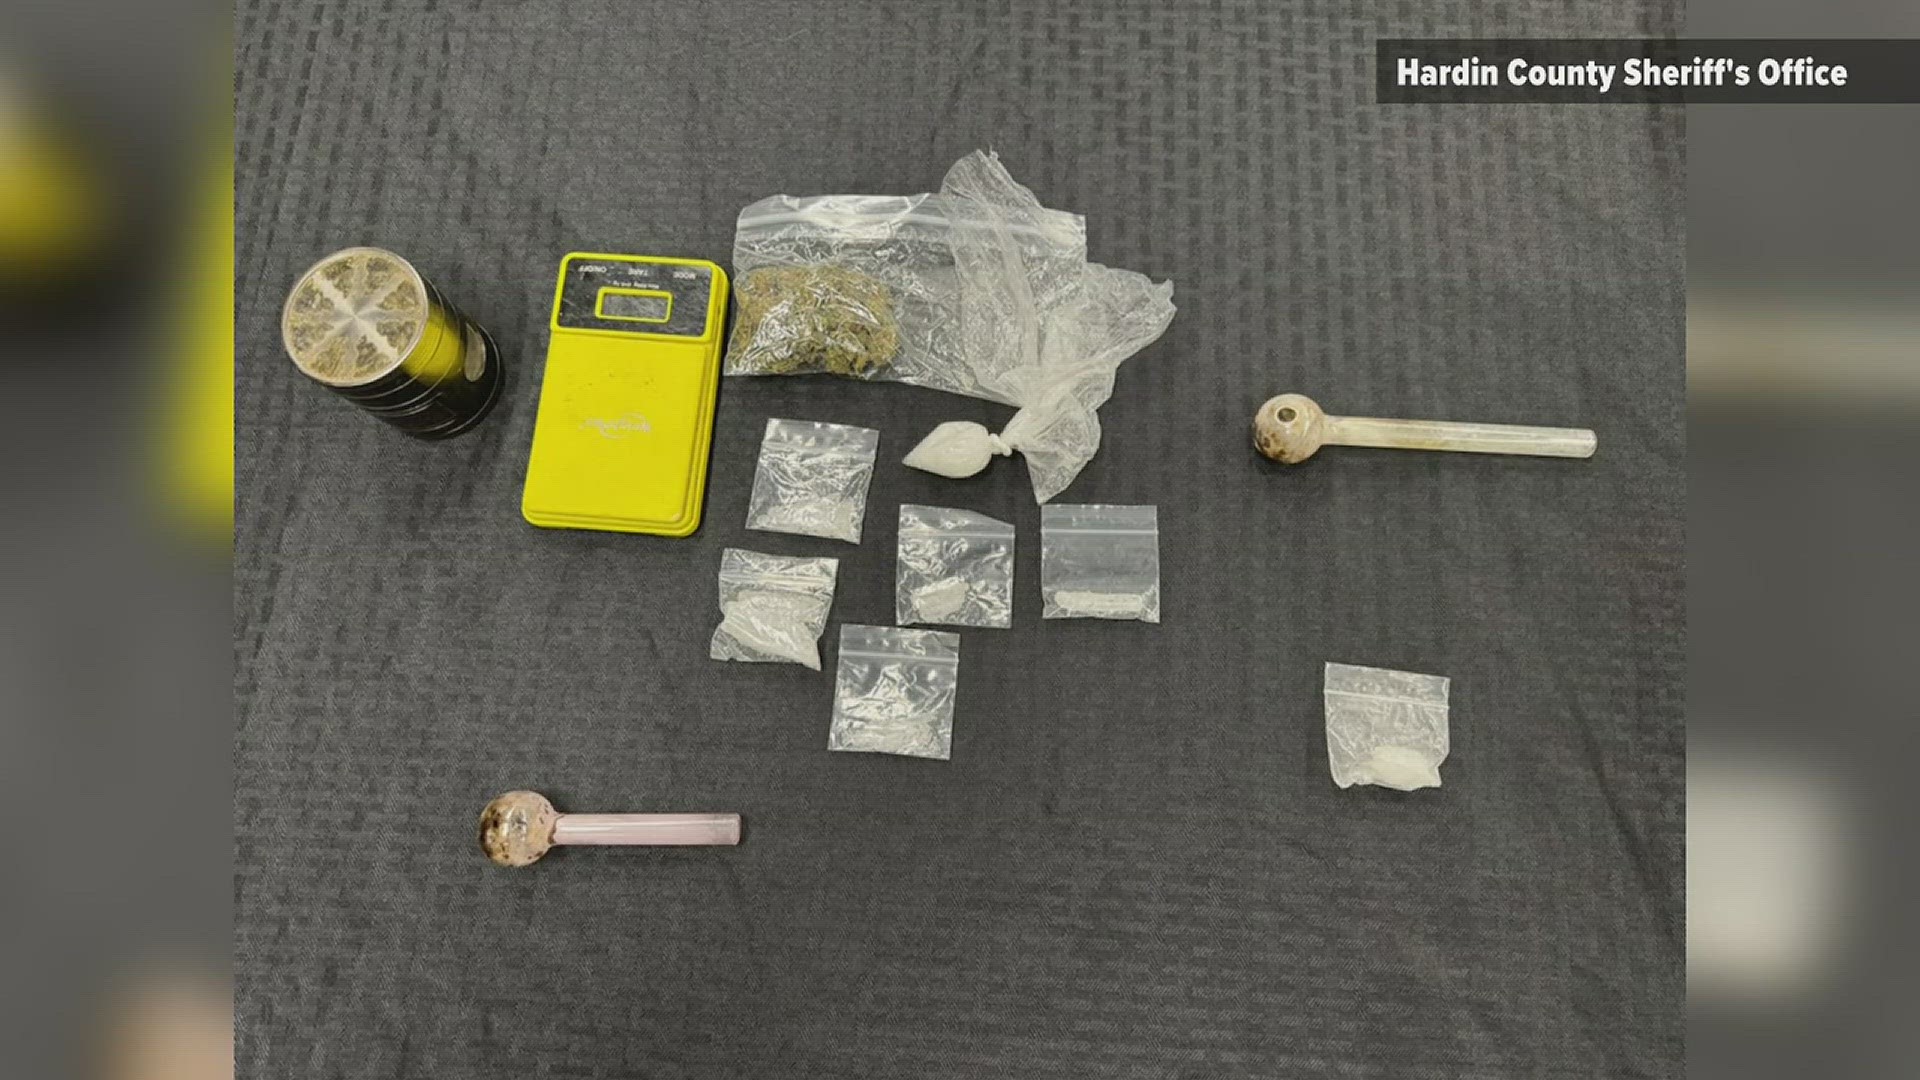 Investigators found around 20 grams of methamphetamine along with marijuana and a firearm.